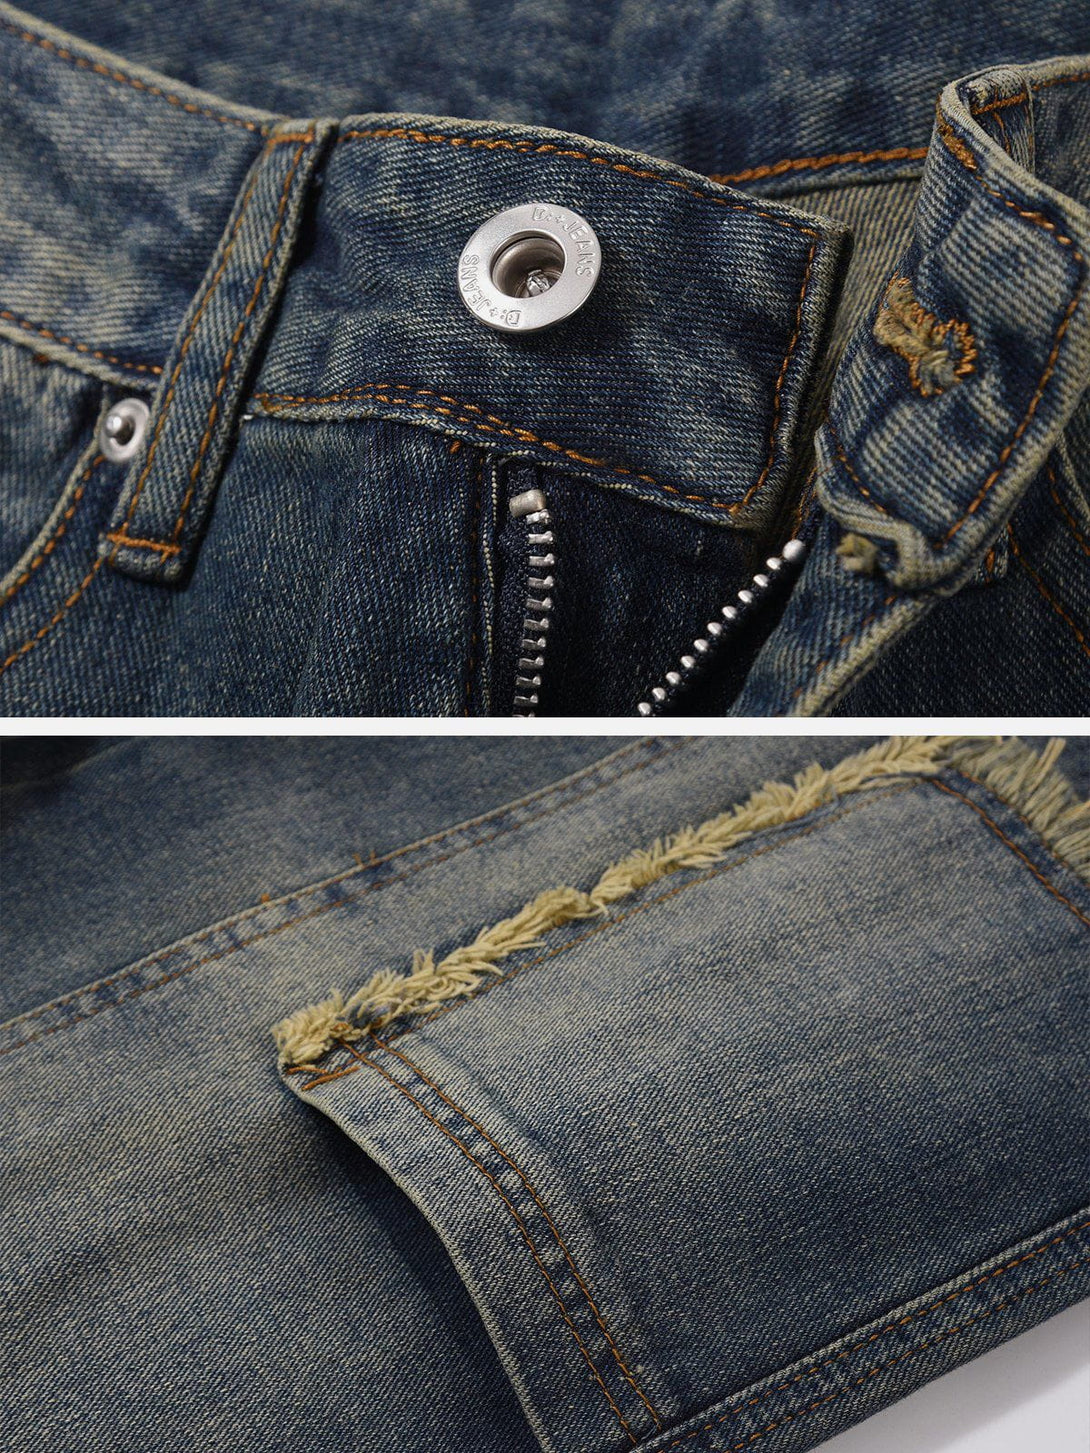 Levefly - Vintage Washed Multi-Pocket Raw Jeans - Streetwear Fashion - levefly.com